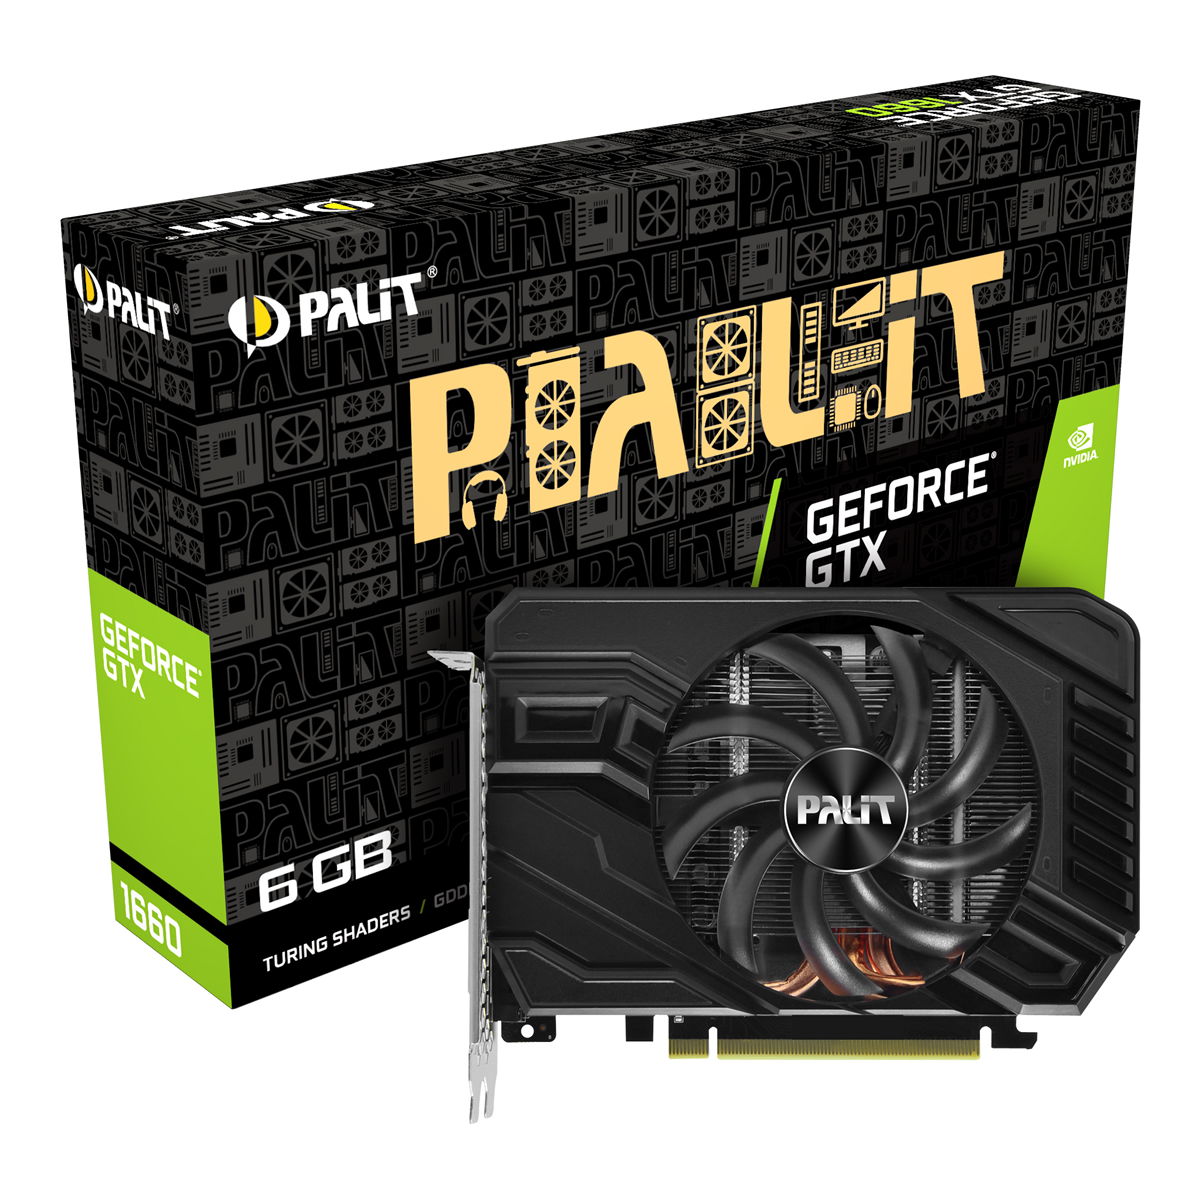 Palit - Palit GeForce GTX 1660 StormX 6144MB GDDR5 PCI-Express Graphics Card